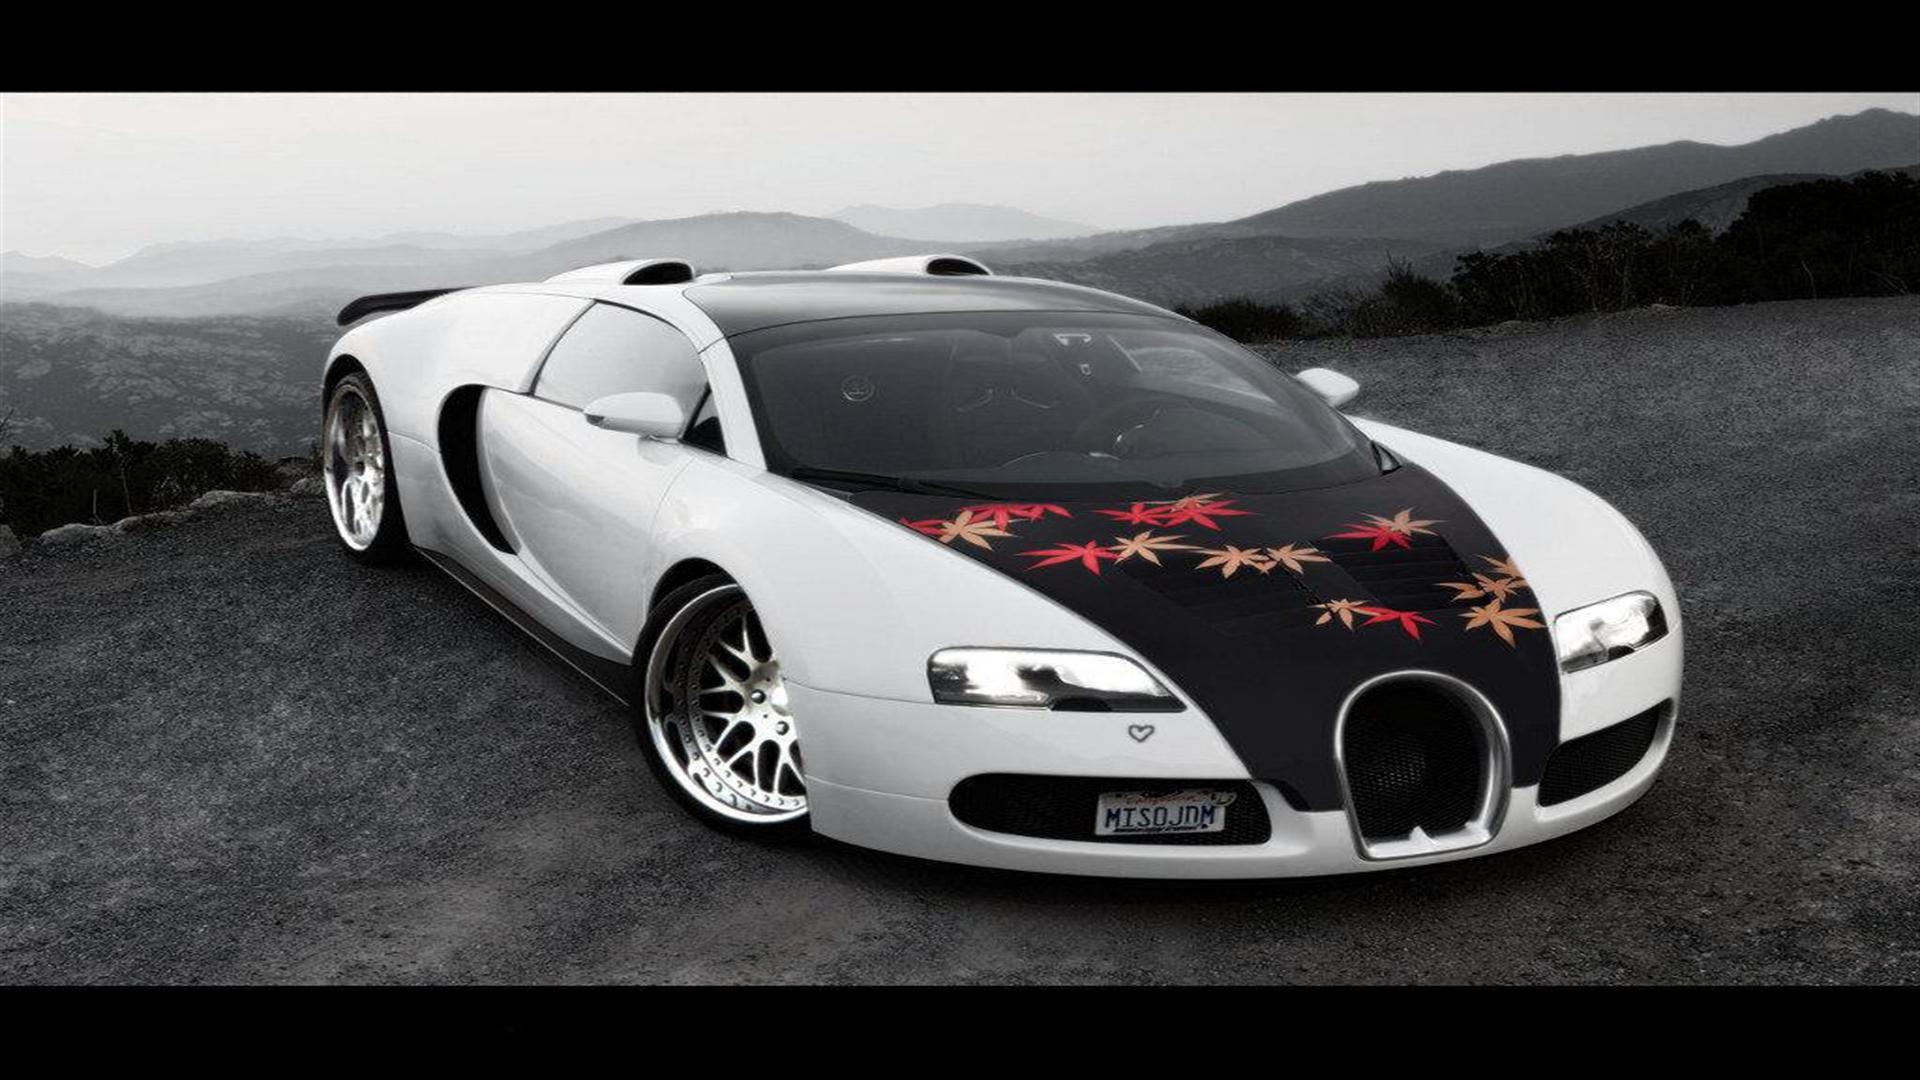 45+] Bugatti HD Wallpapers 1080p - WallpaperSafari